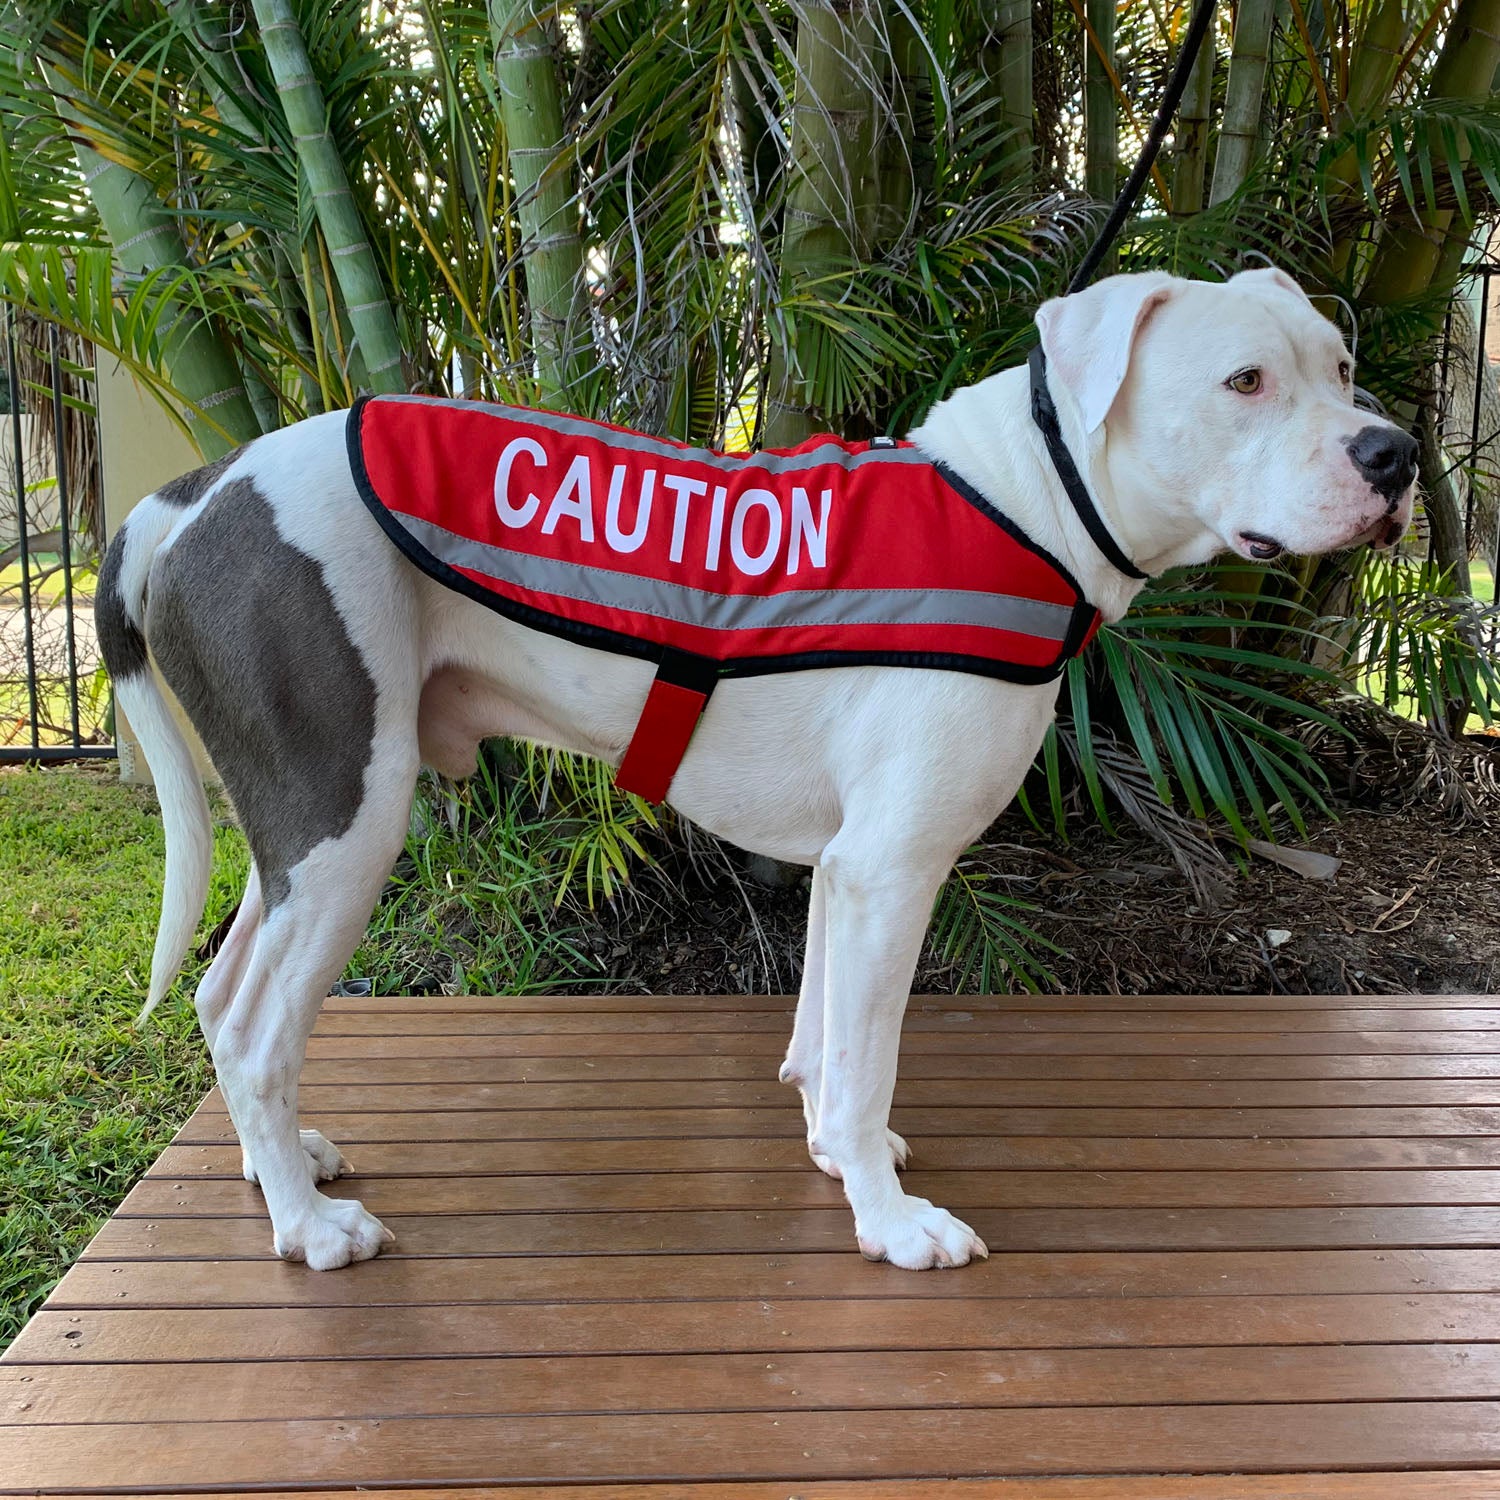 Dexil Friendly Dog Collars Red CAUTION L/XL M/L Reflective Dog Coat